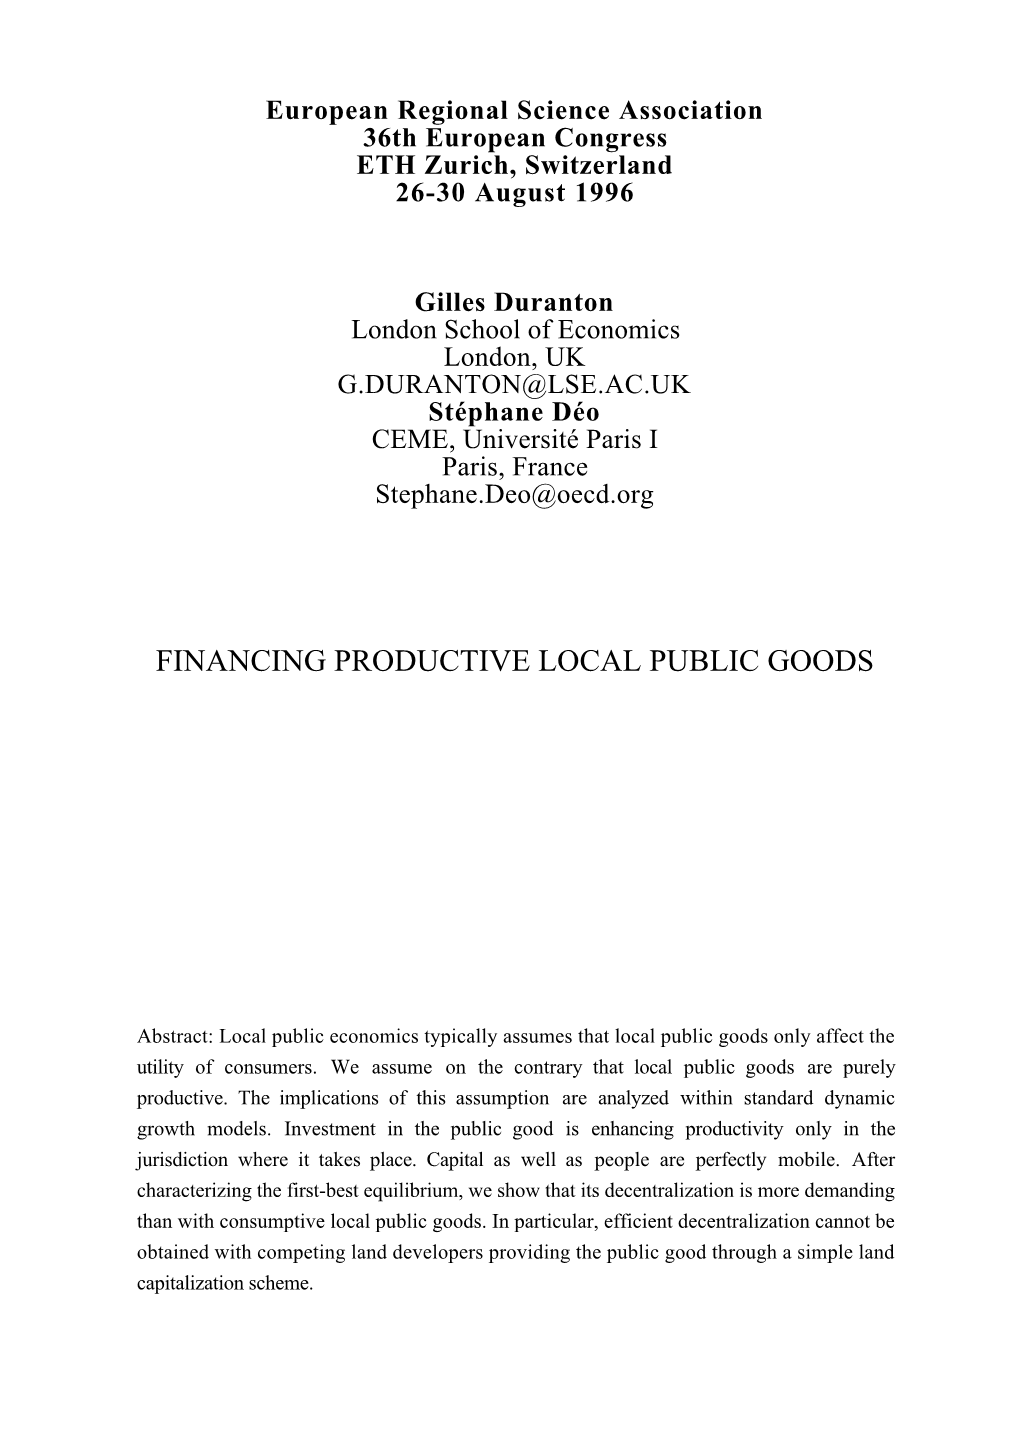 Financing Productive Local Public Goods